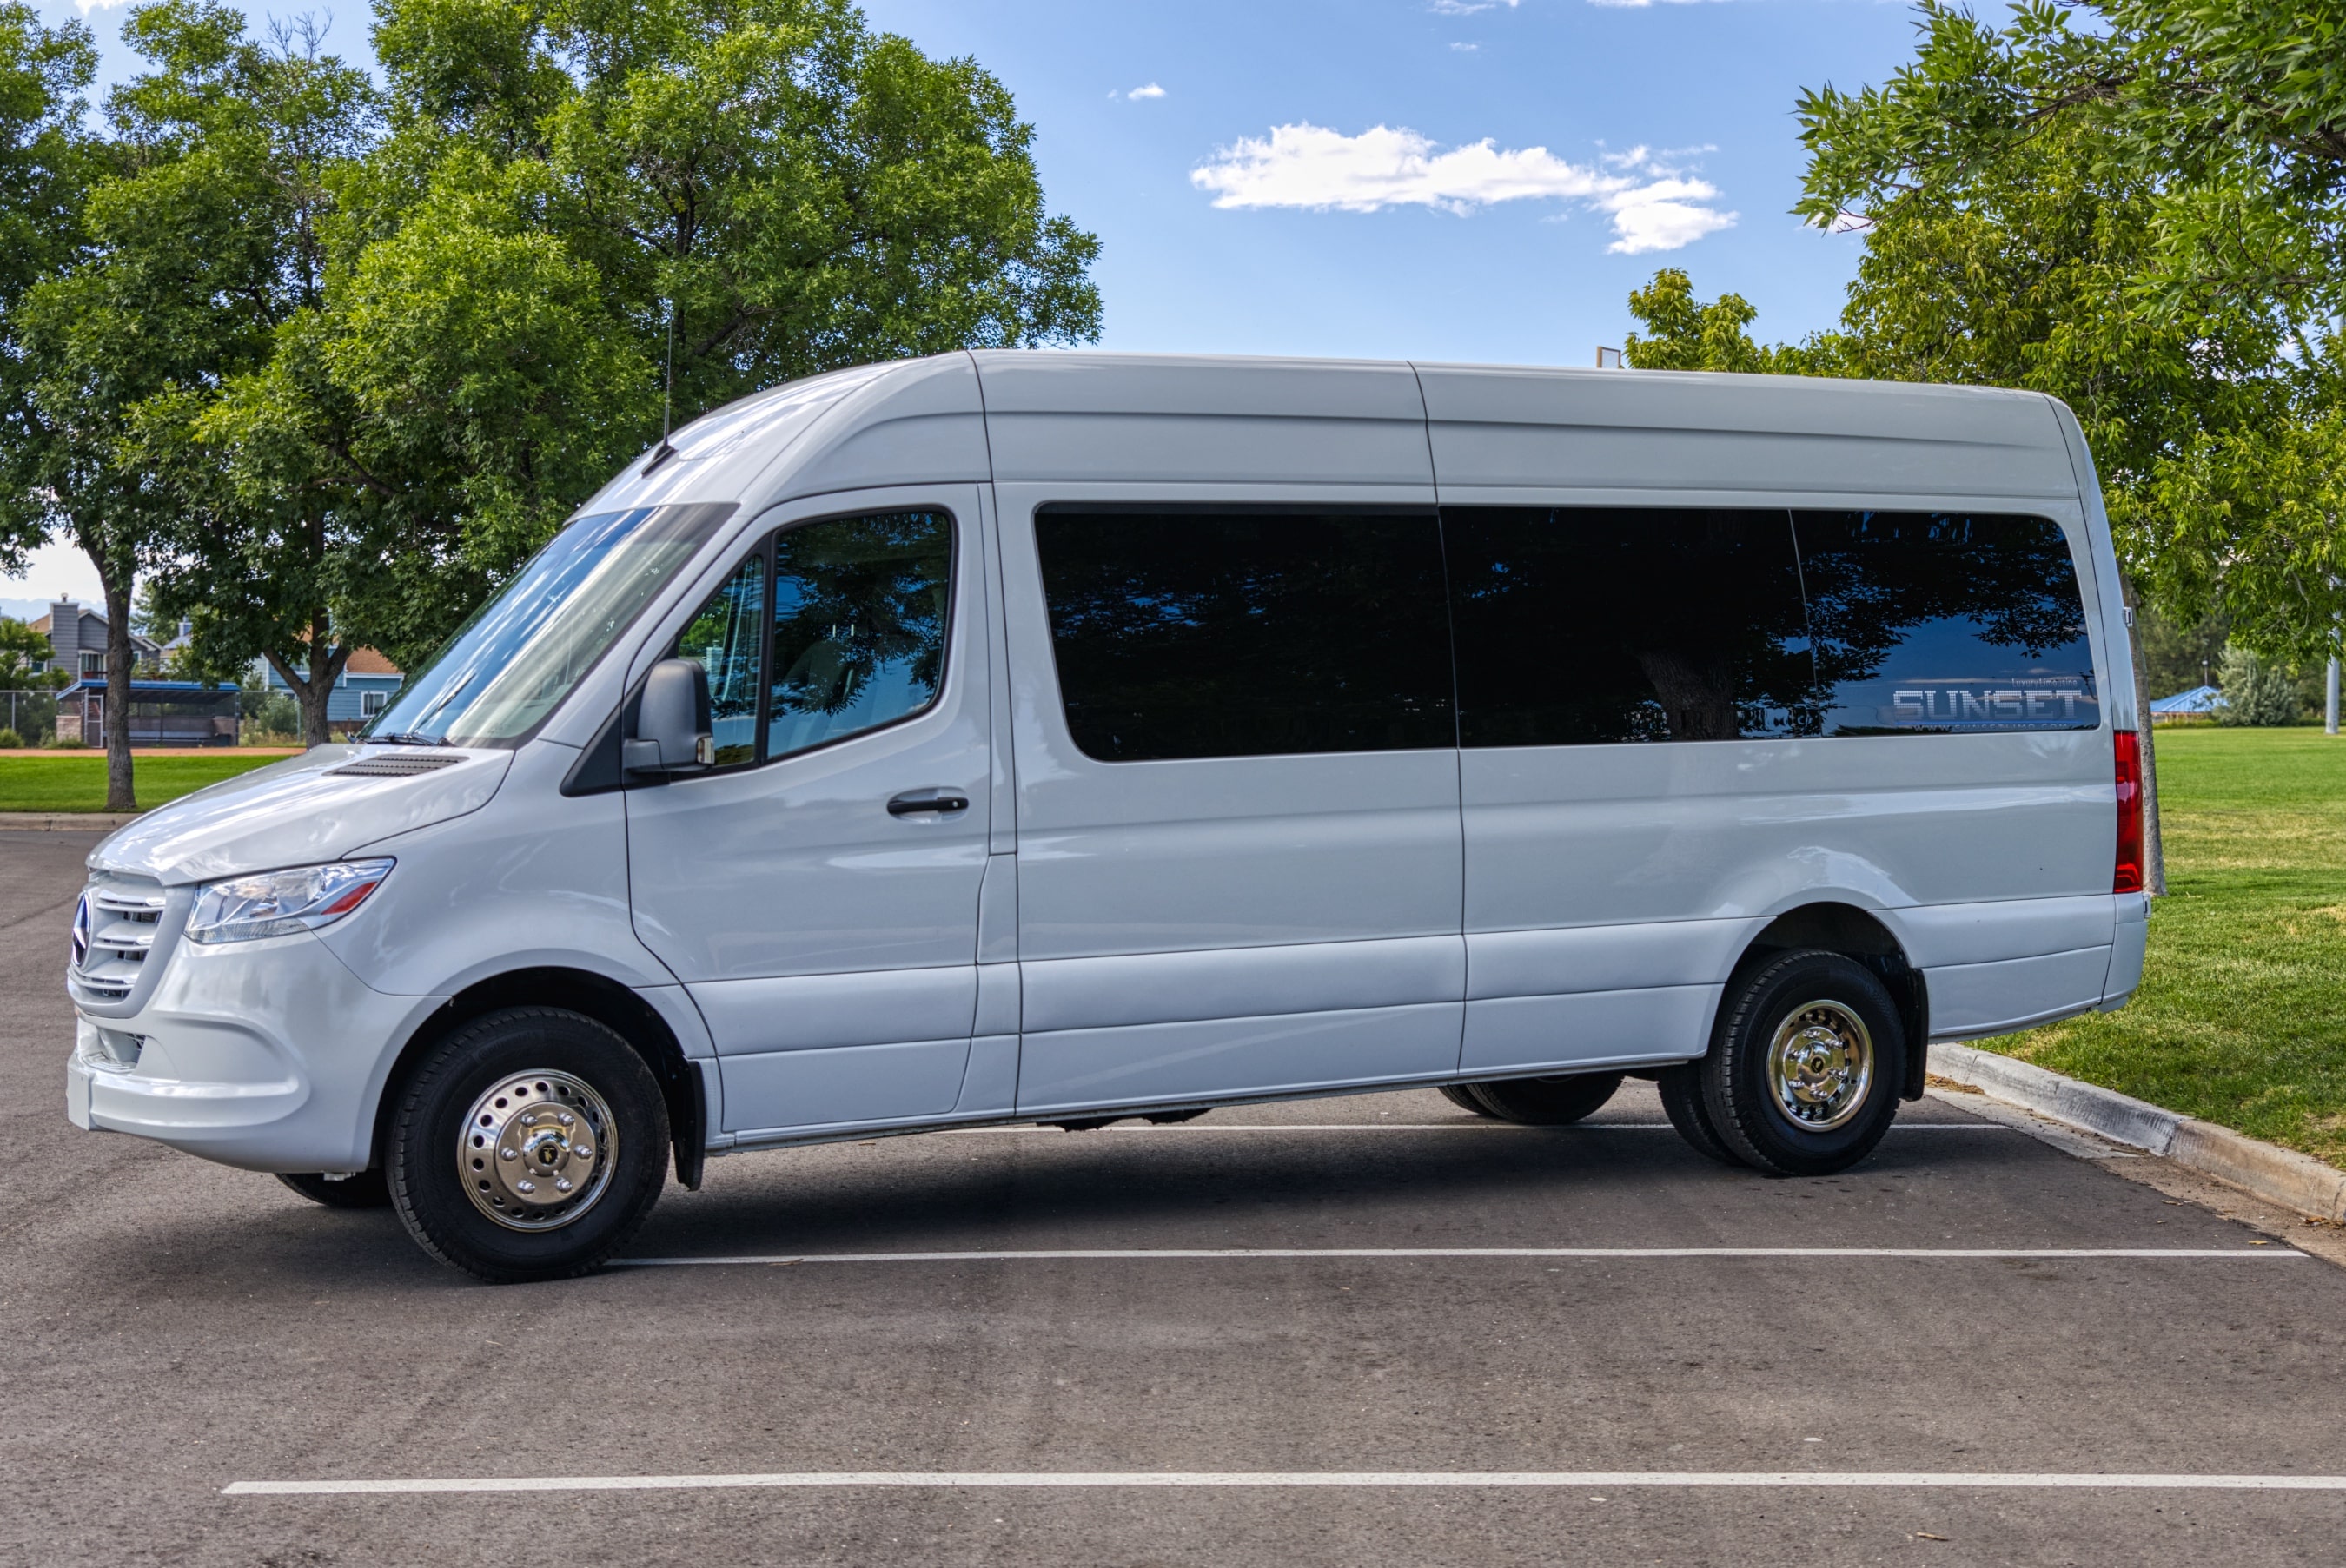 A light gray executive van with dark windows and tires. 